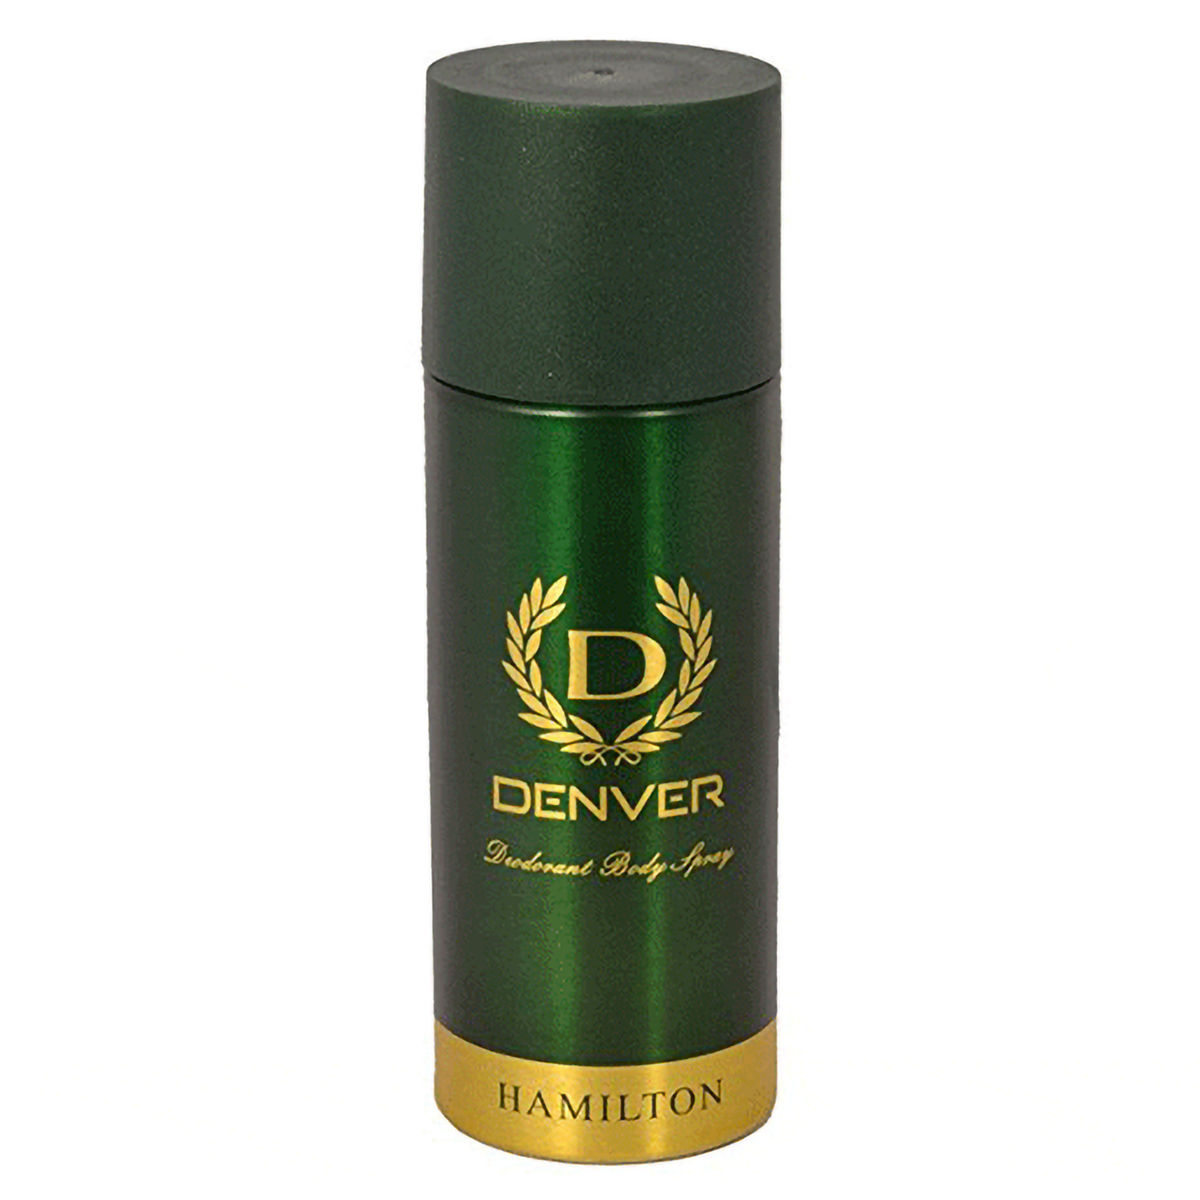 Buy Denver Hamilton Deodrant Body Spray, 165 ml Online